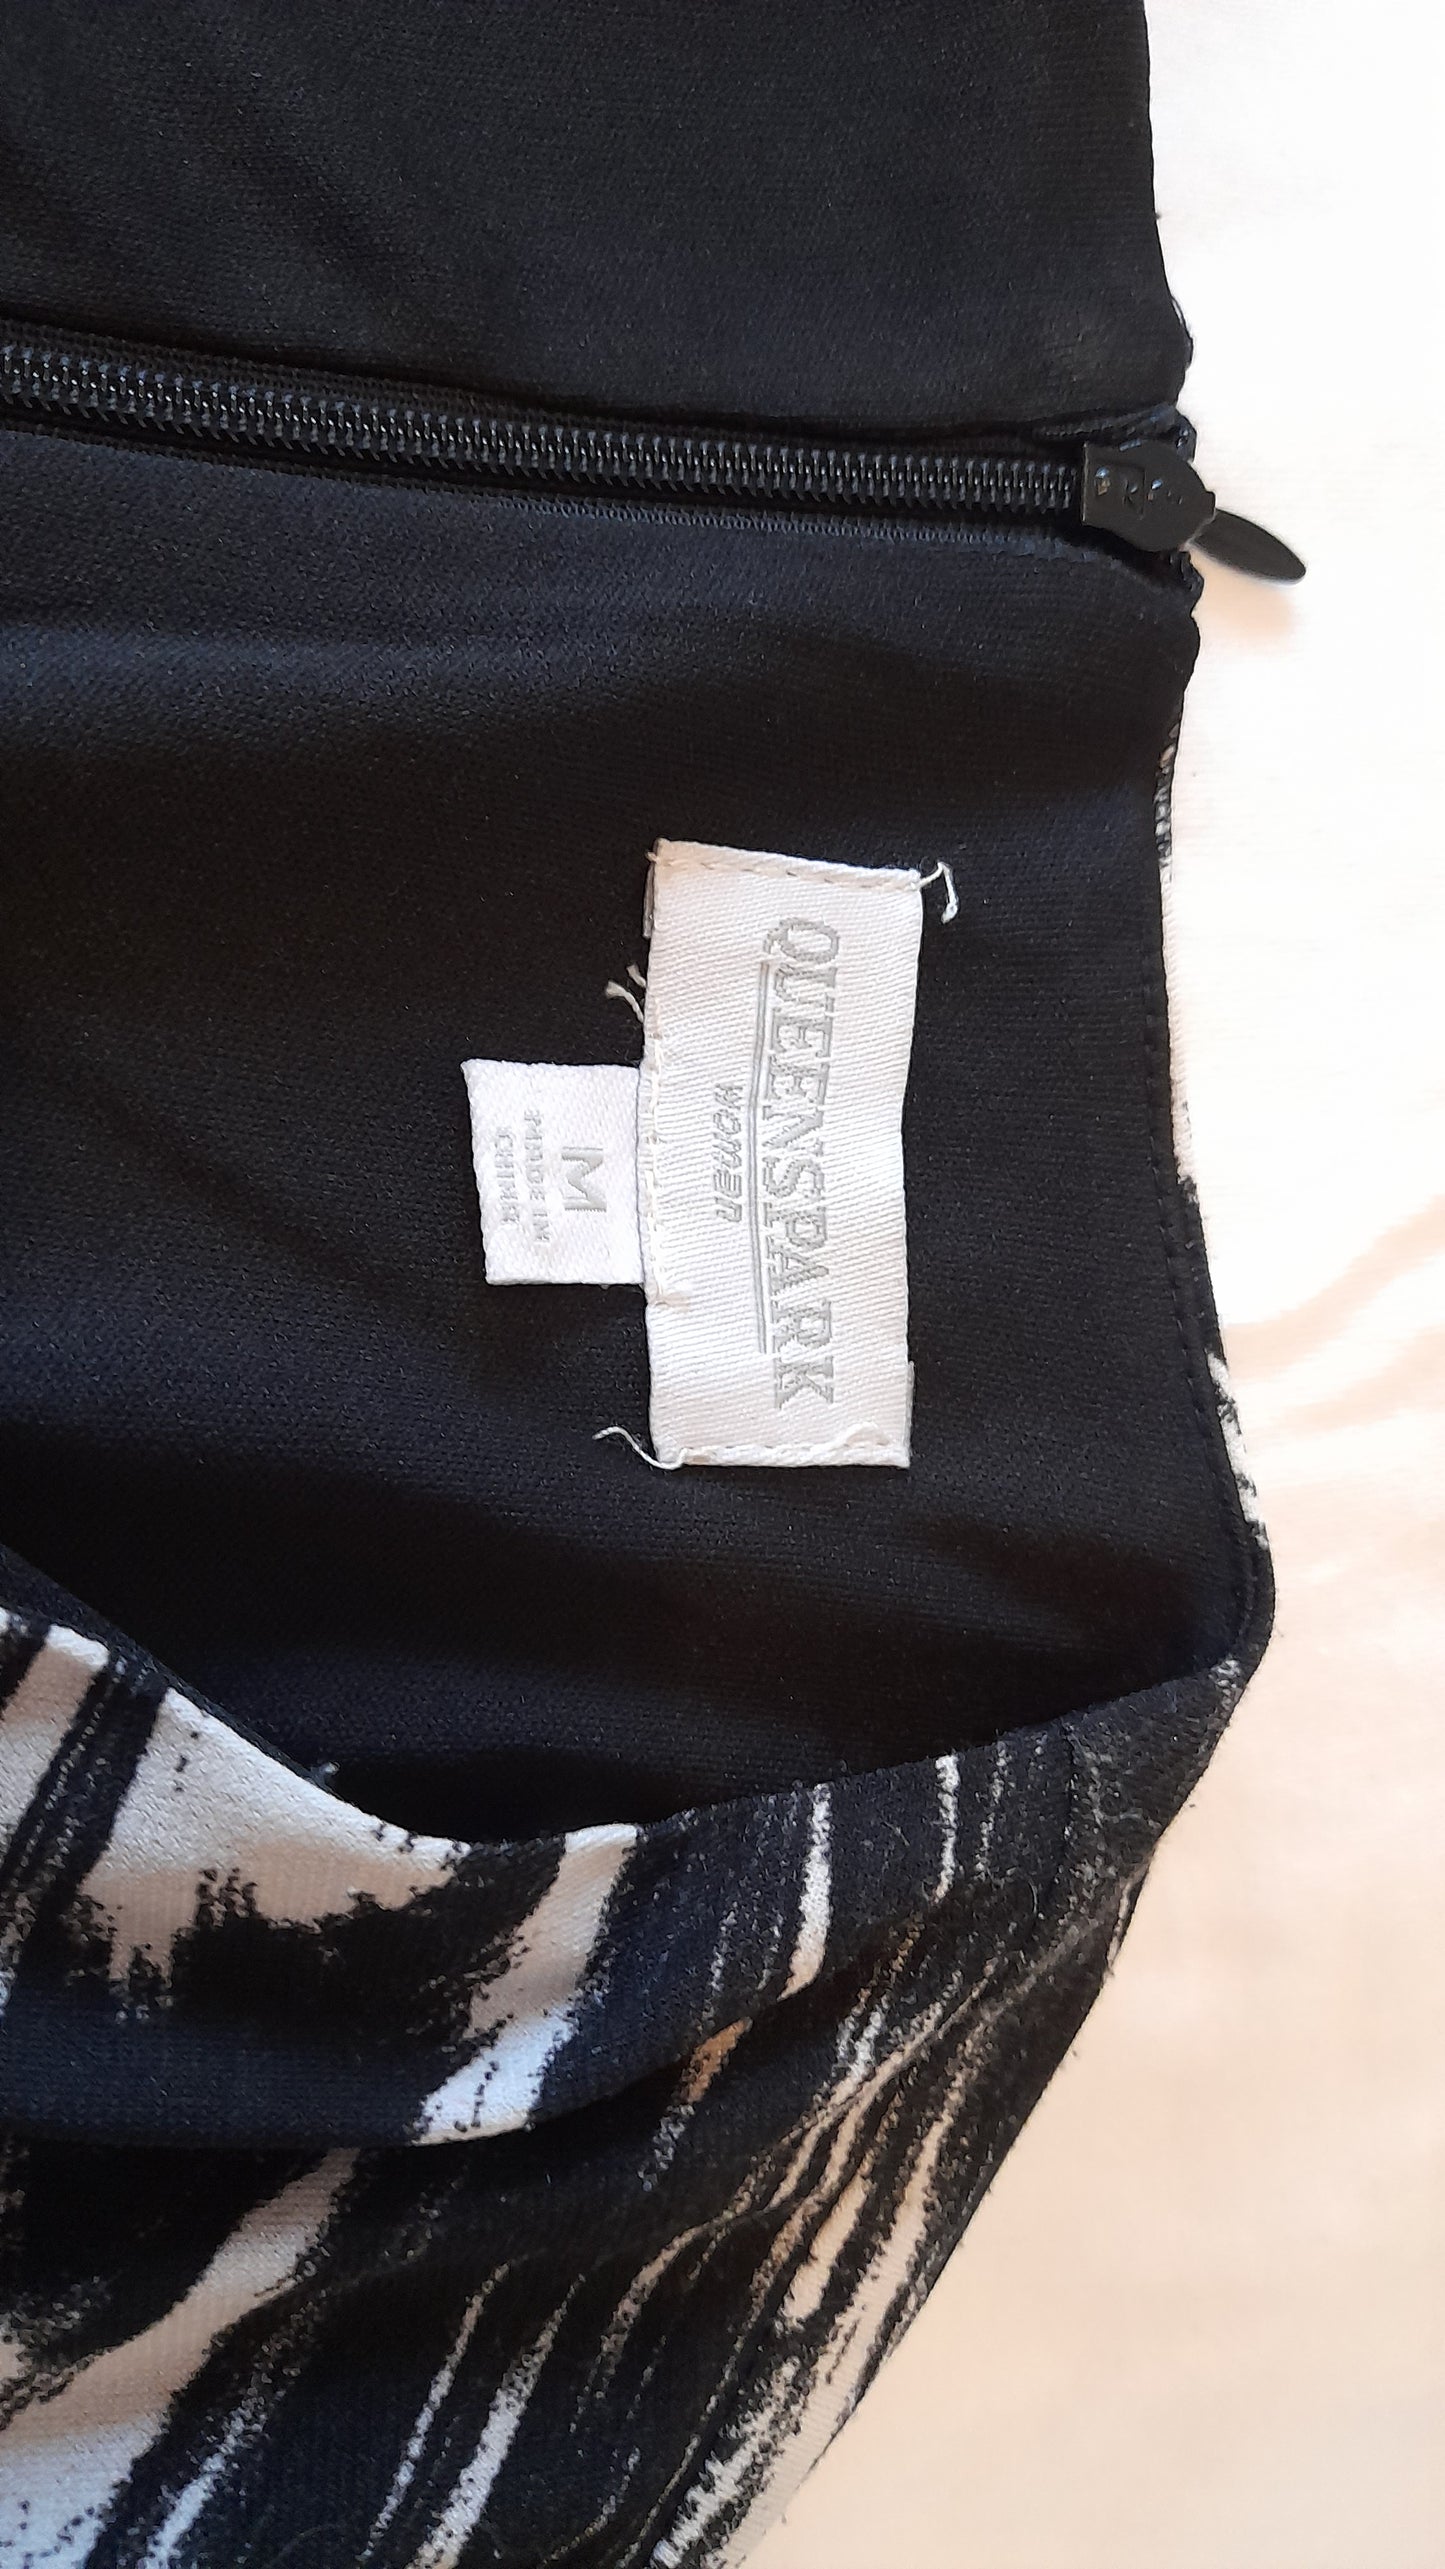 Dress - Queenspark Black & White Wrap Size M/12-14